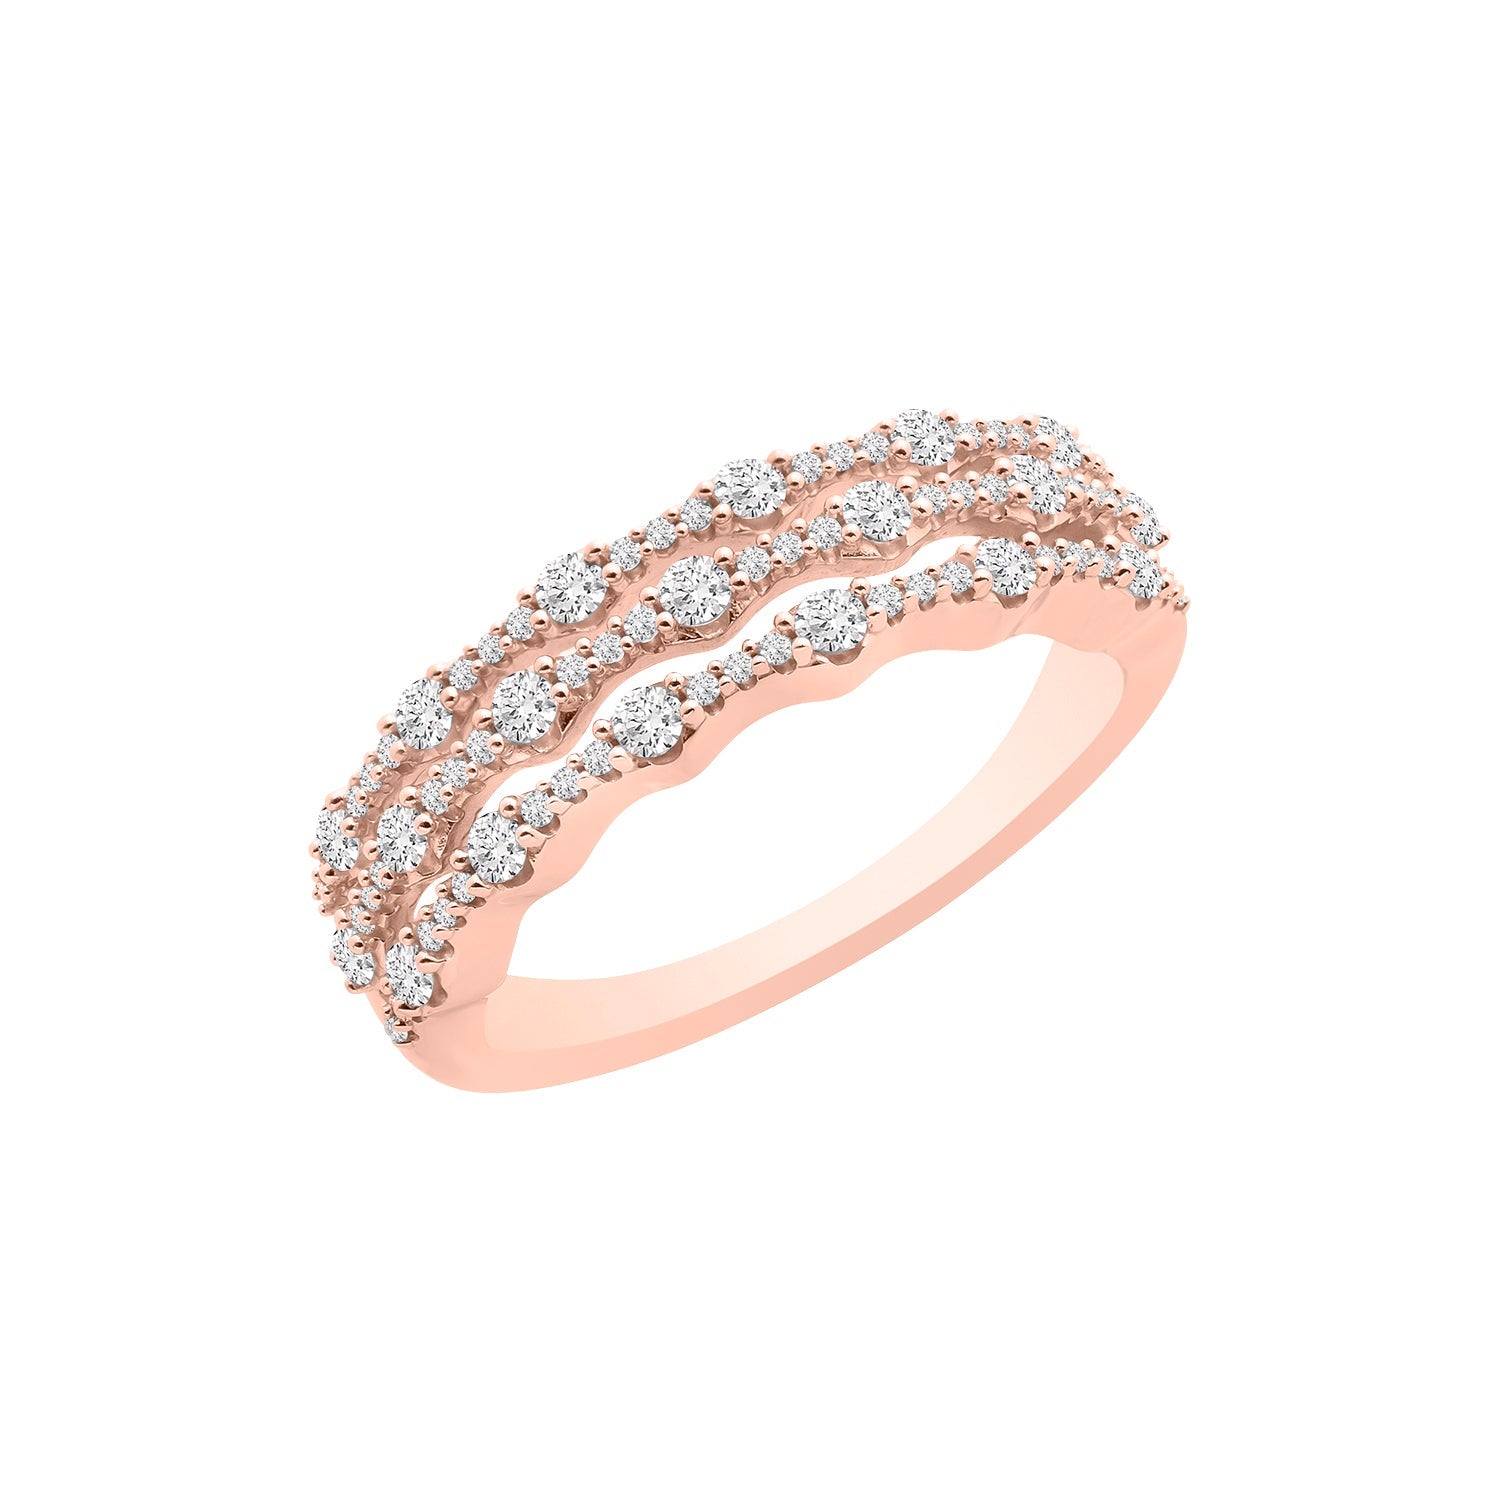 Regina Diamond Ring in Rose Gold